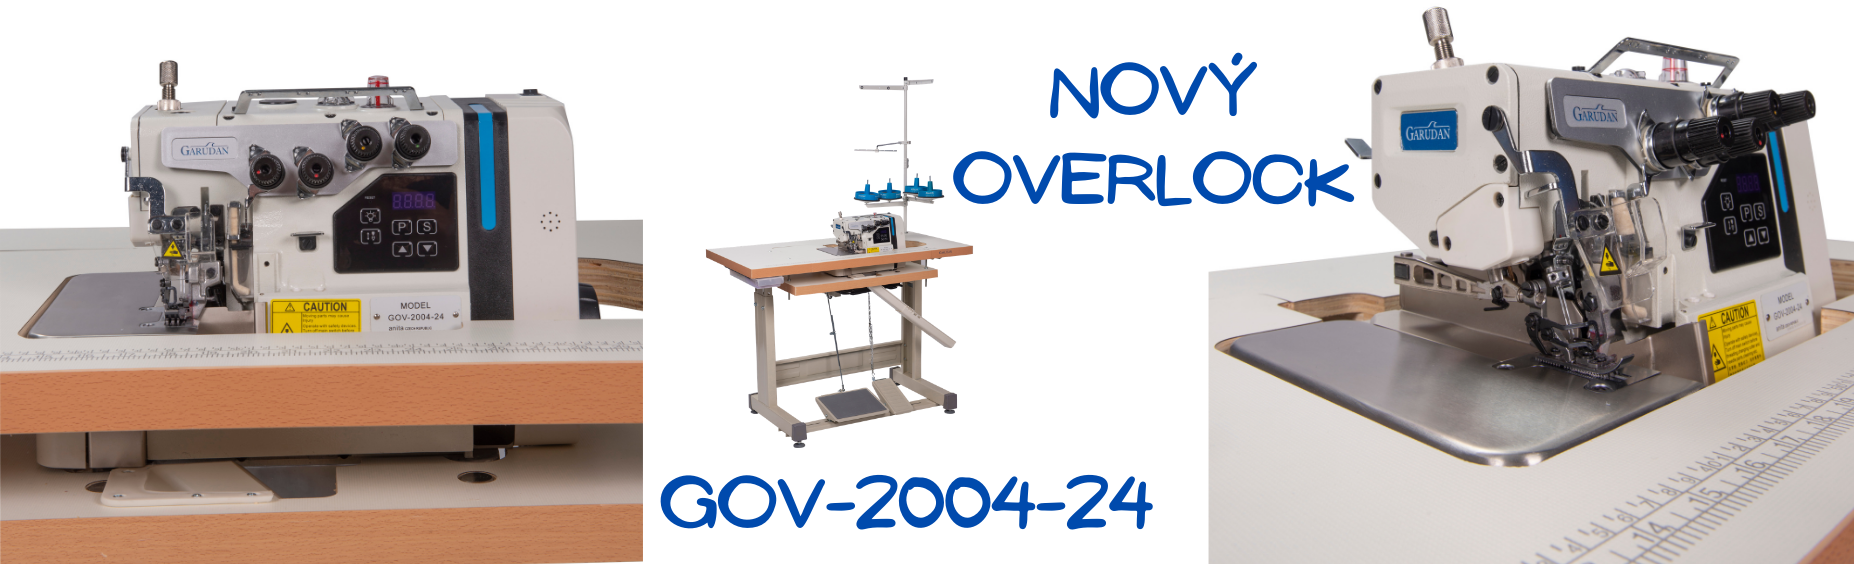 Nový průmyslový overlock GOV-2004-24.